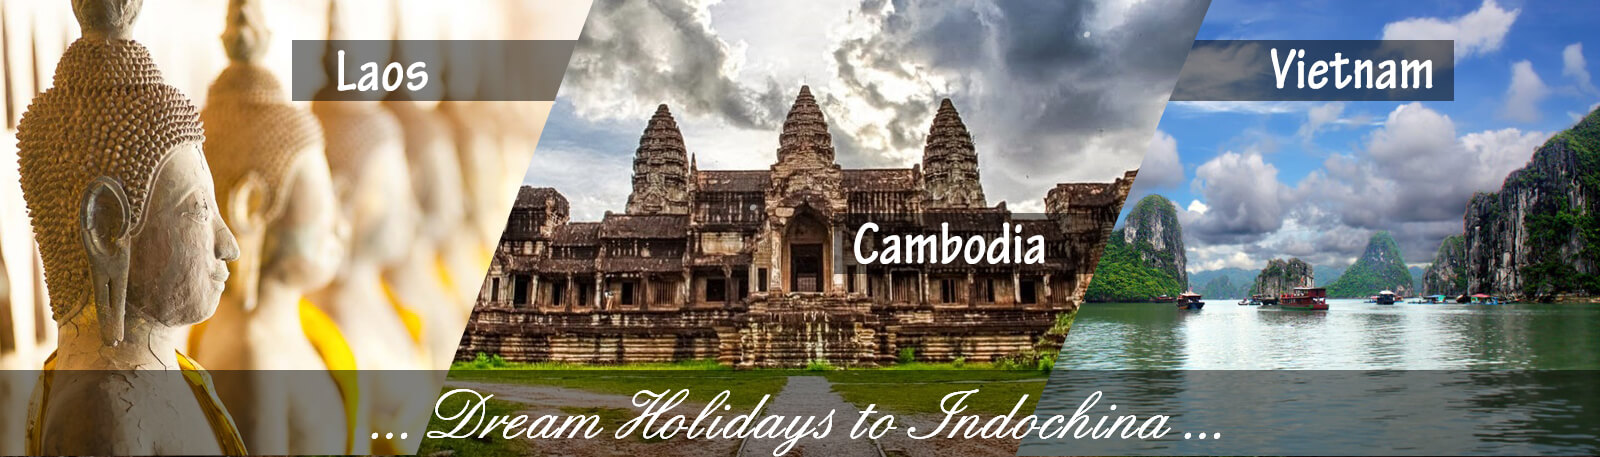 Holidays to Laos Cambodia and Vietnam